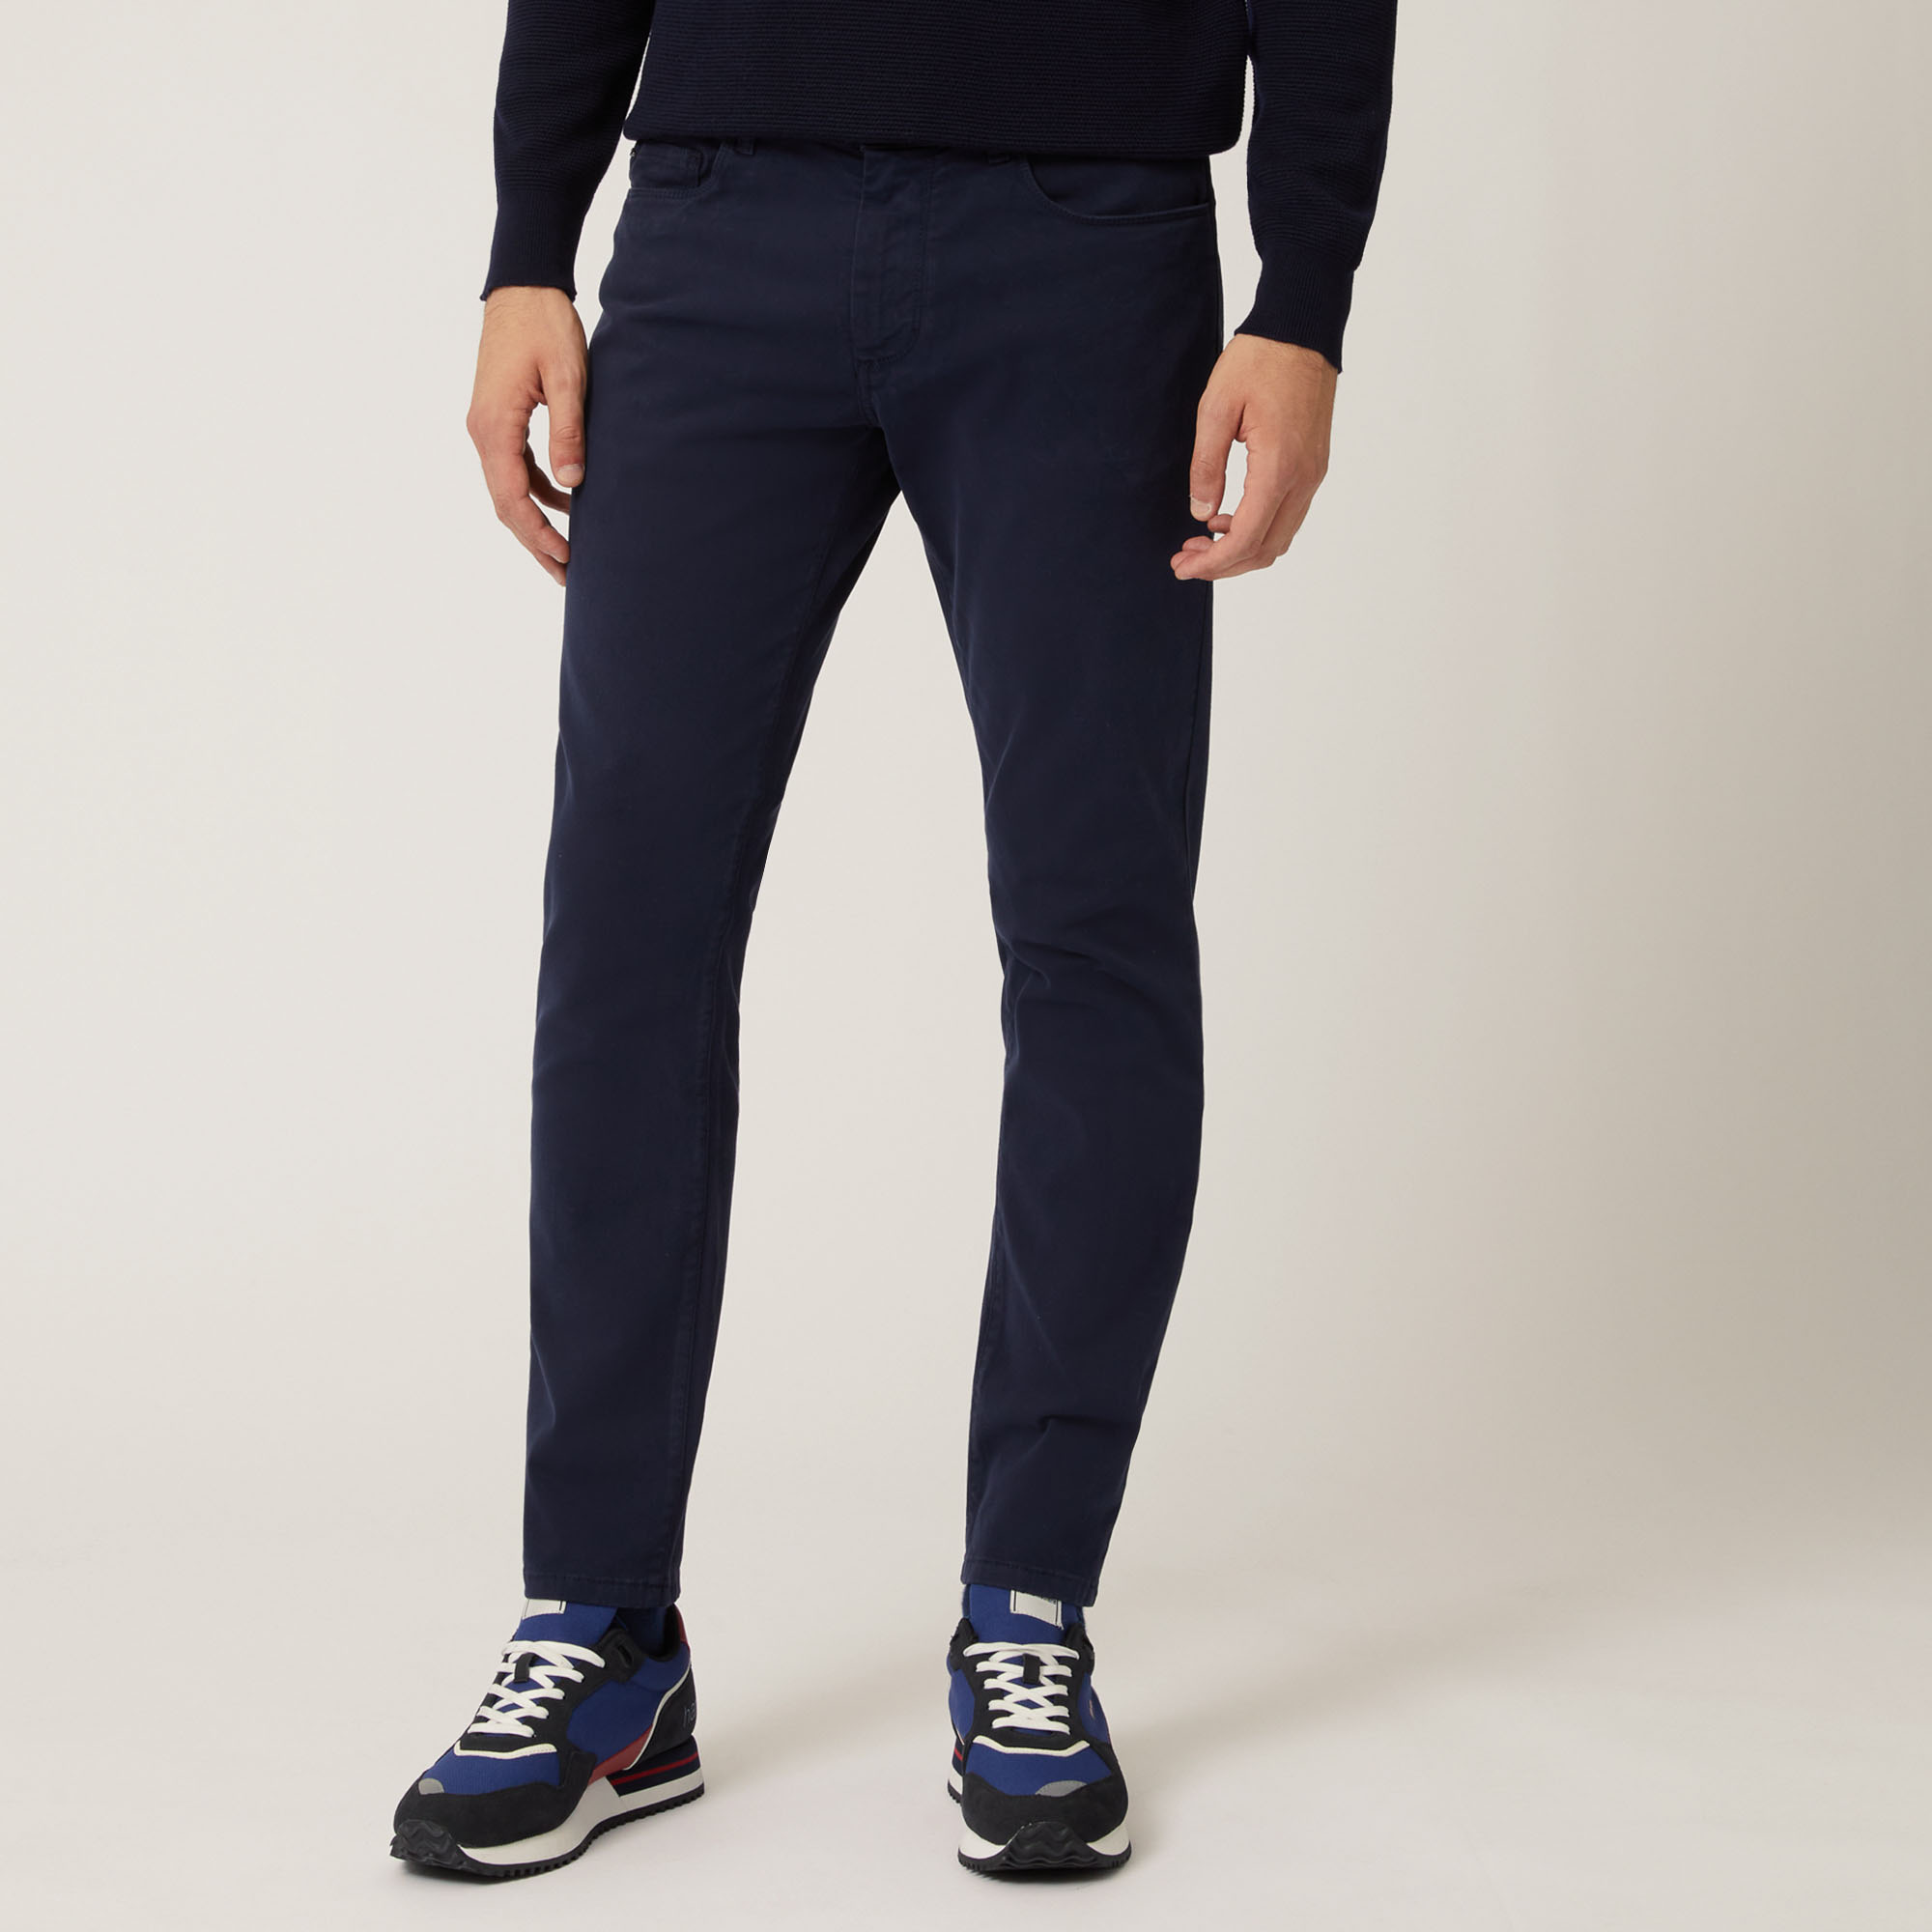 Pantalone Cinque Tasche Slim Fit, Blu Navy, large